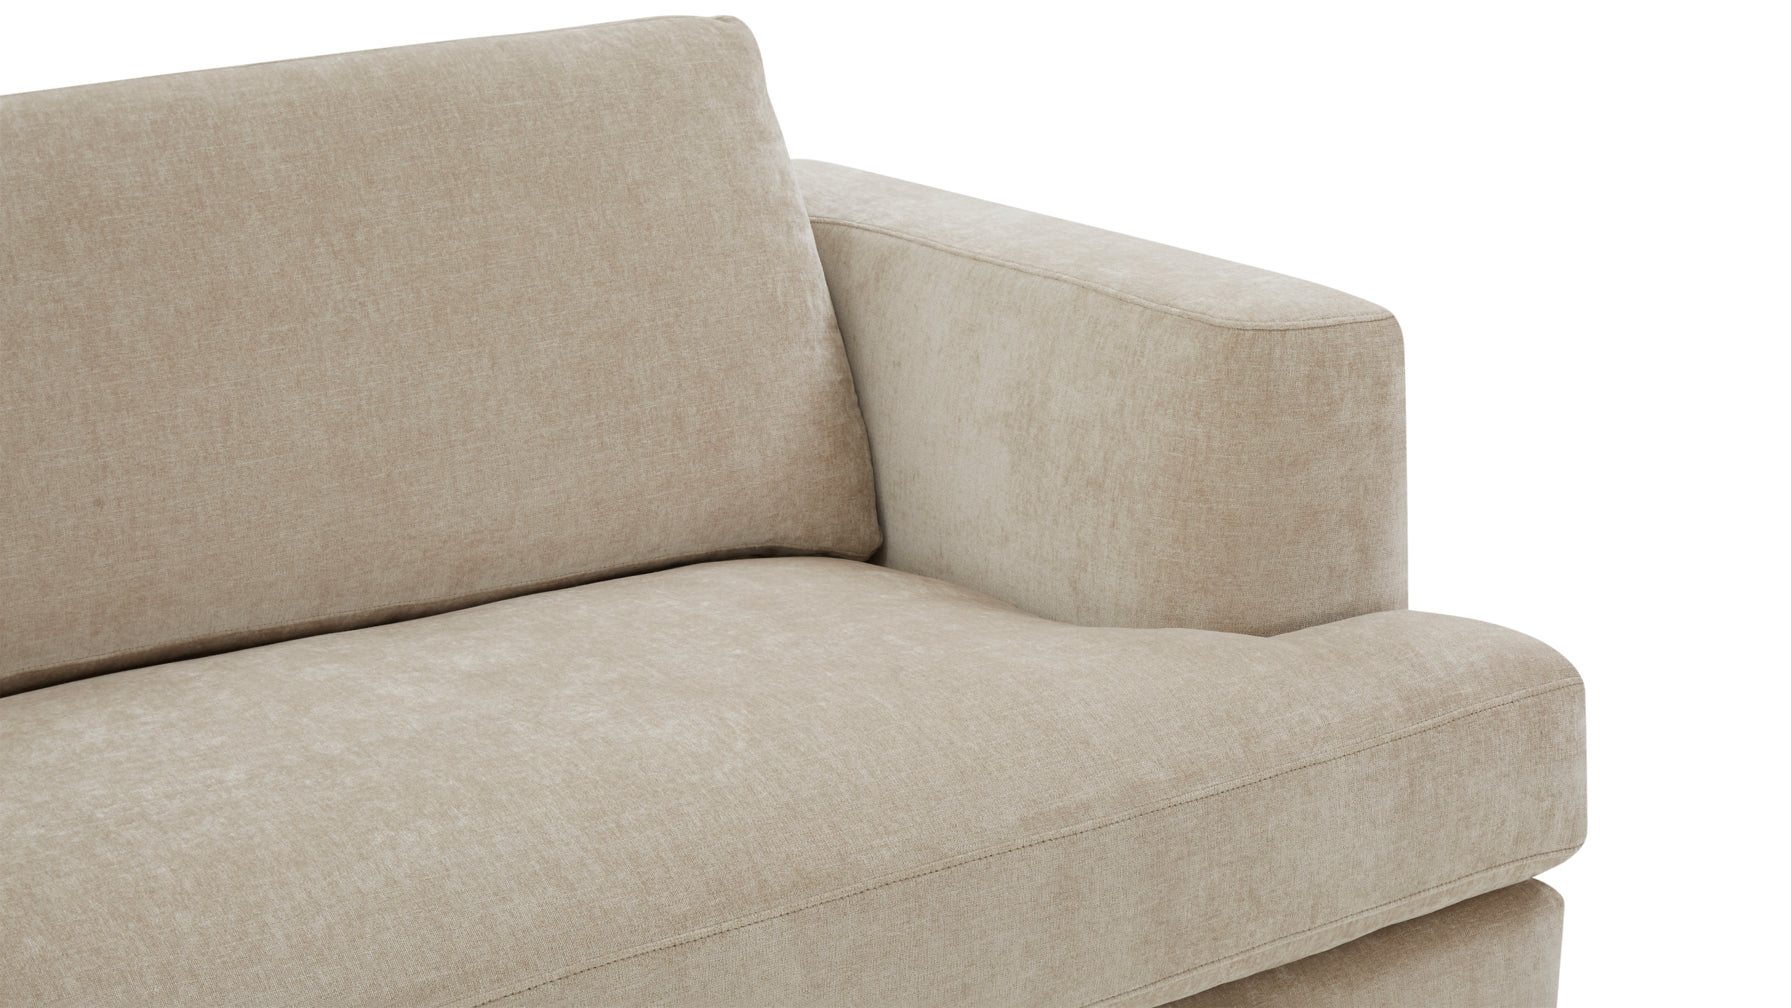 Good Company Sofa, 3 Seater, Cashew - Image 5